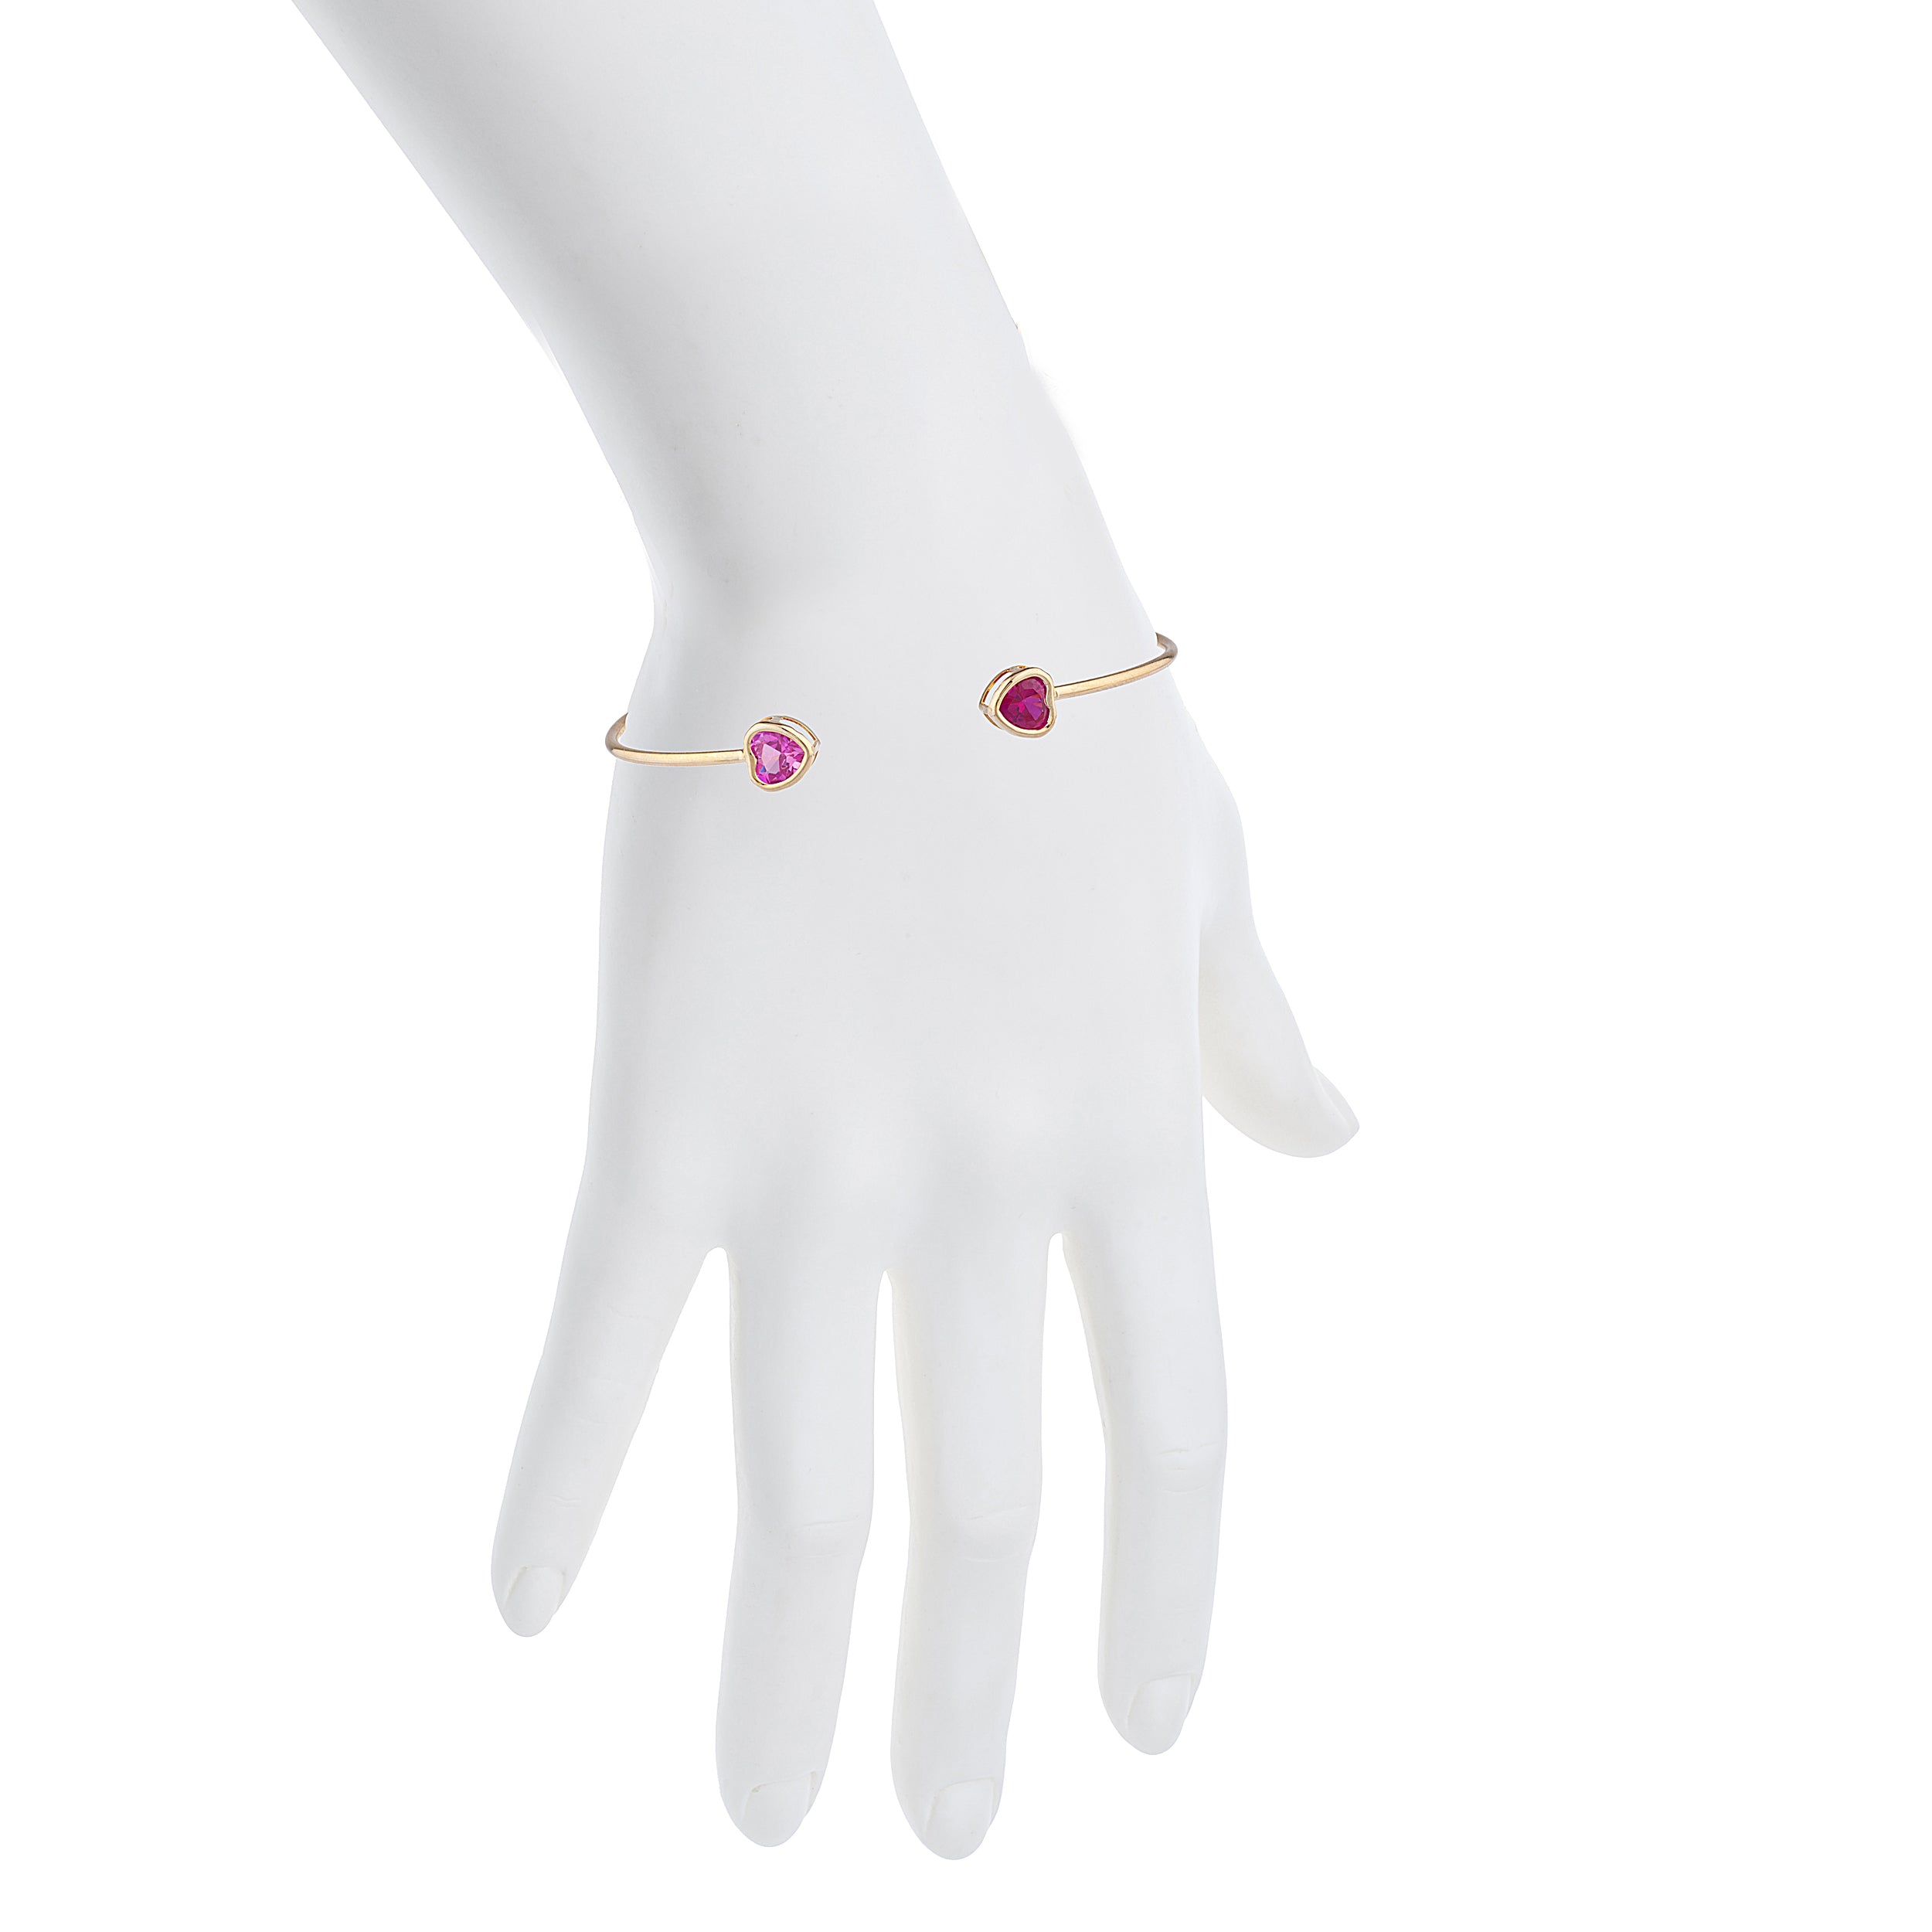 14Kt Gold Created Ruby & Pink Sapphire Heart Bezel Bangle Bracelet